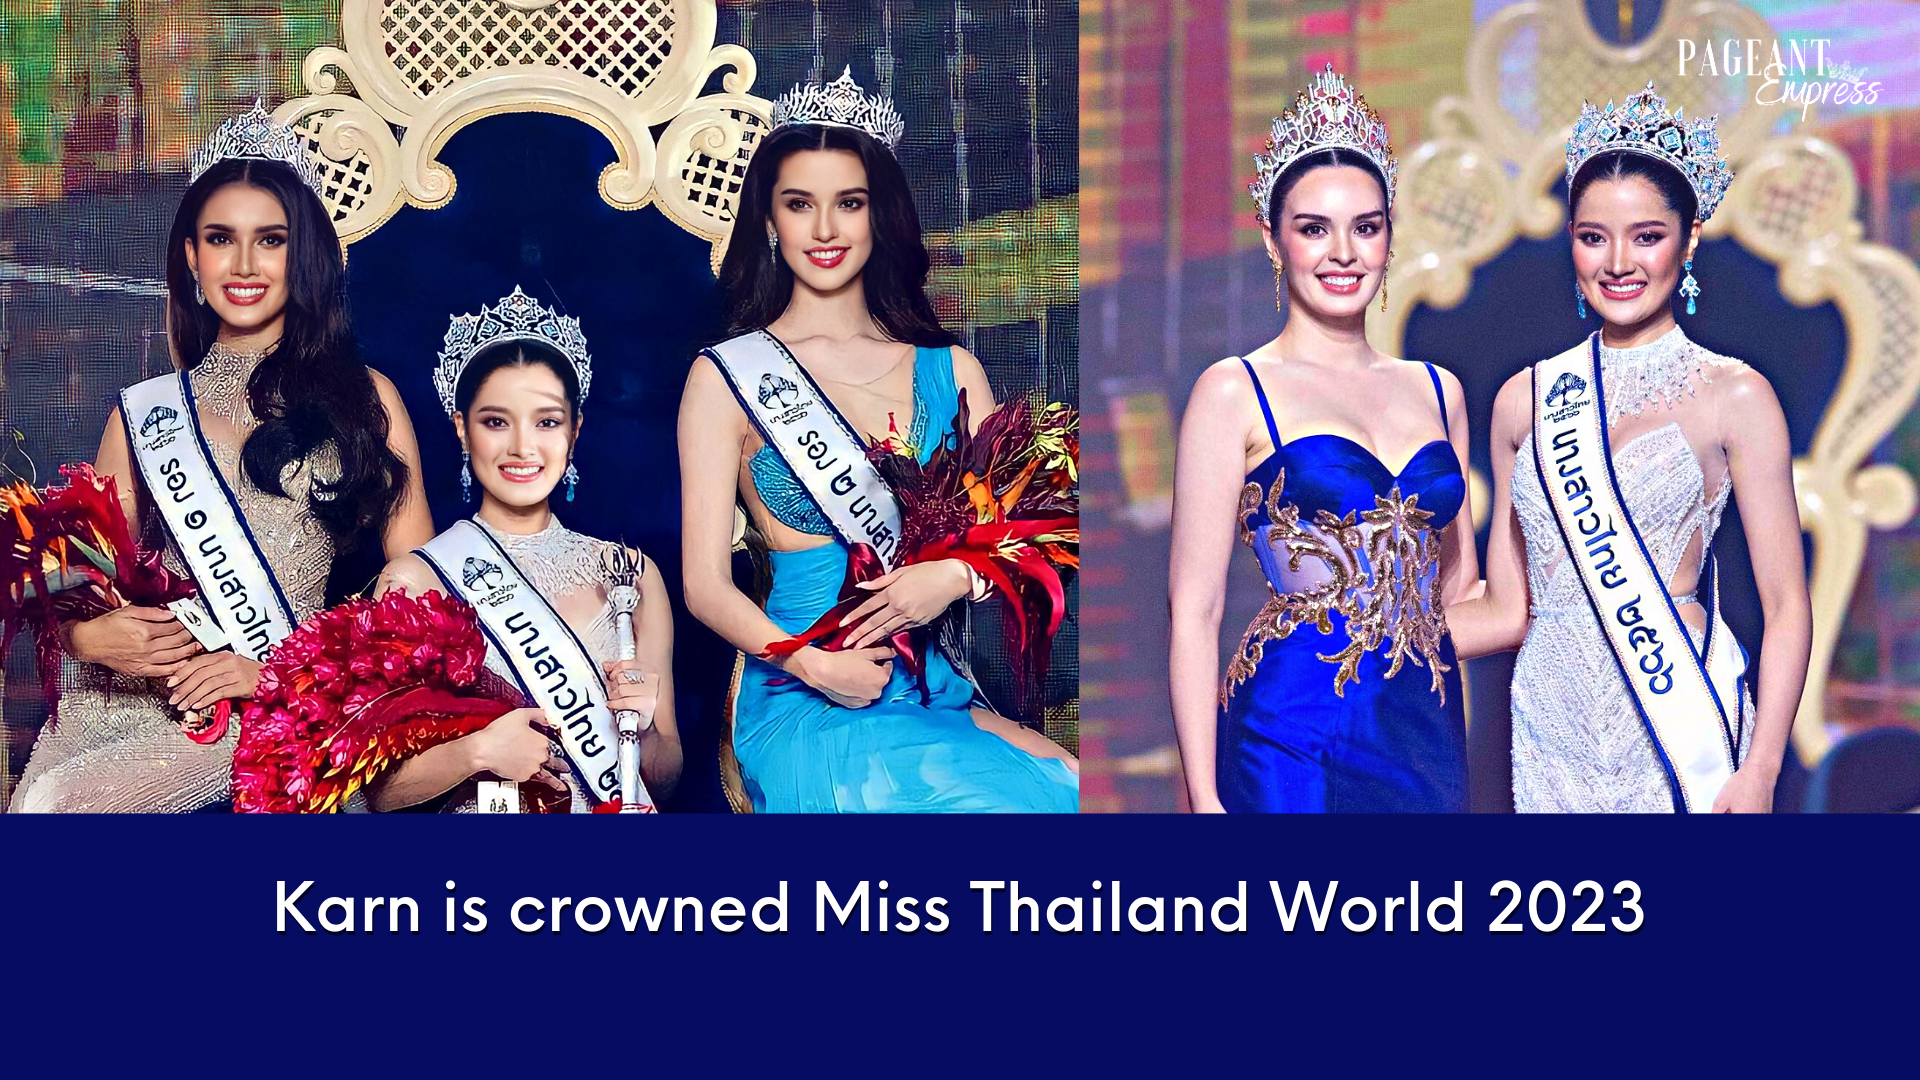 Karn Chonnikarn is crowned Miss Thailand World 2023